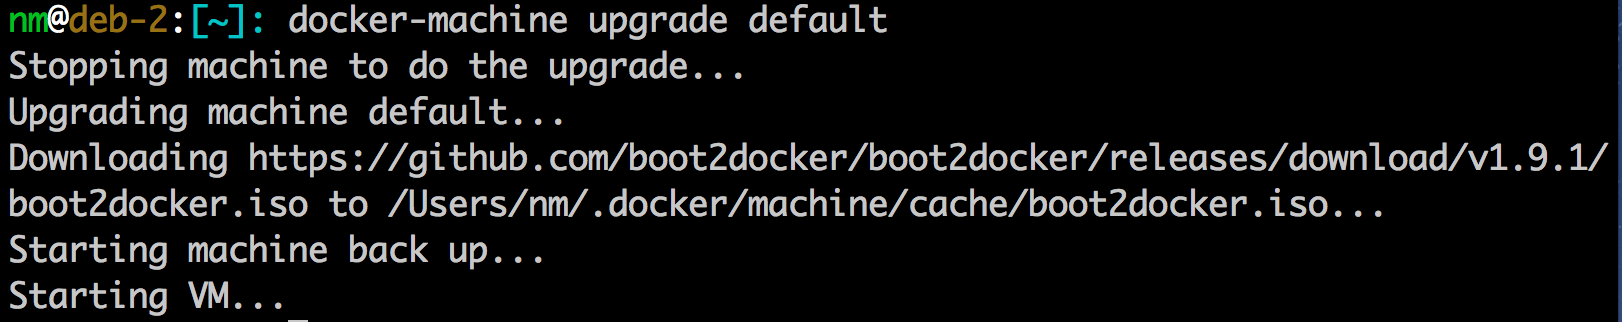 docker for mac upgrade to